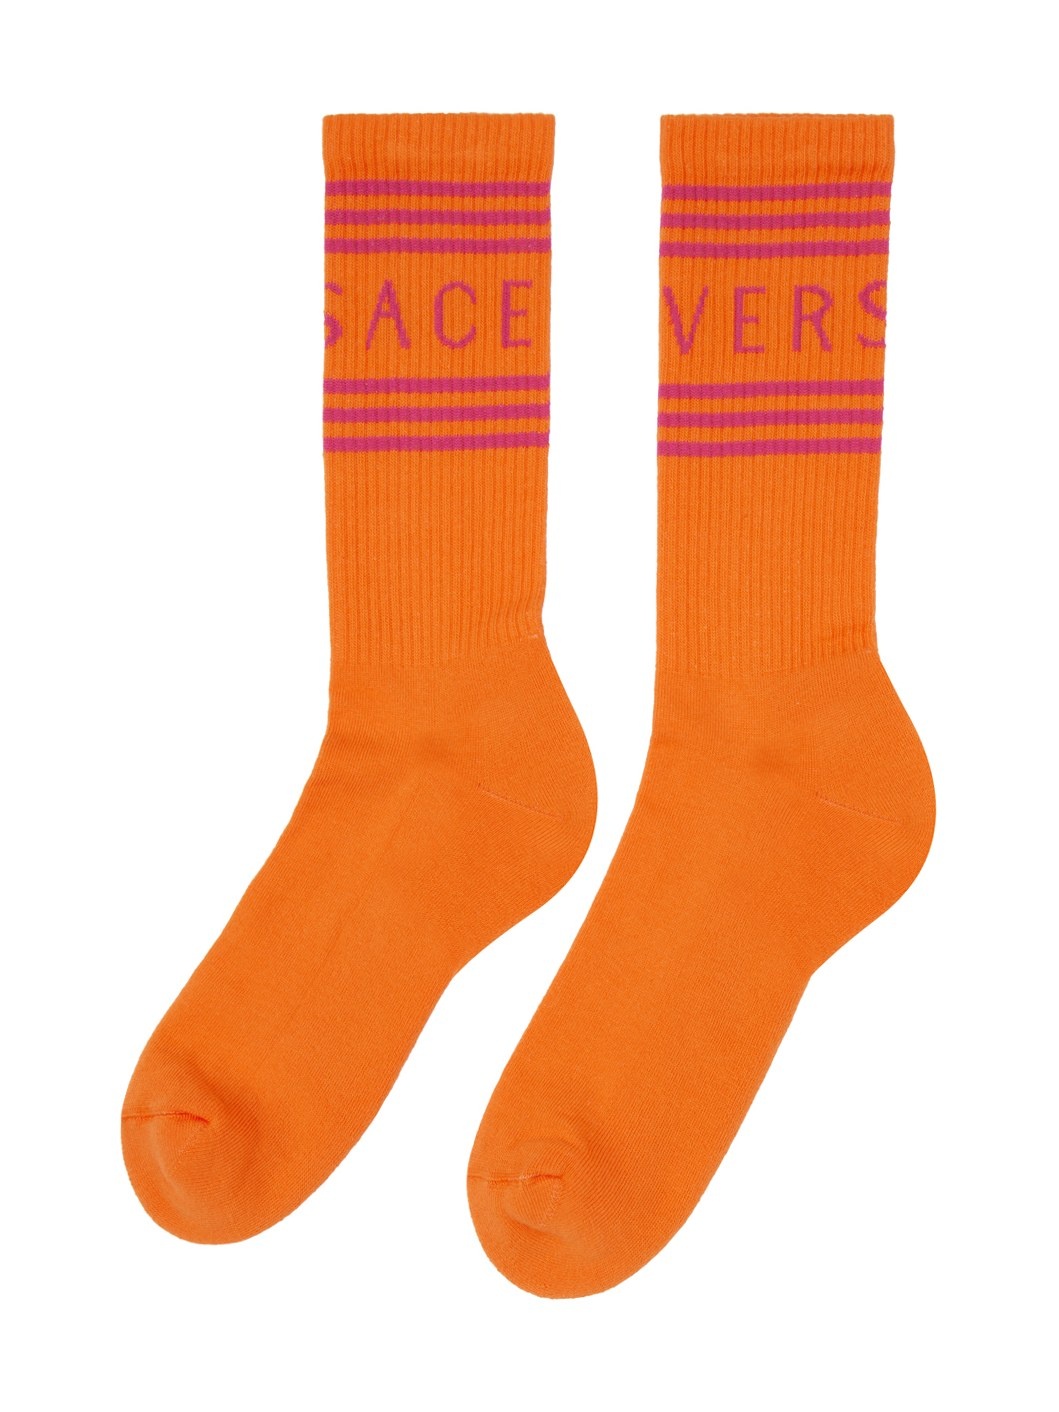 Orange Athletic Socks - 2